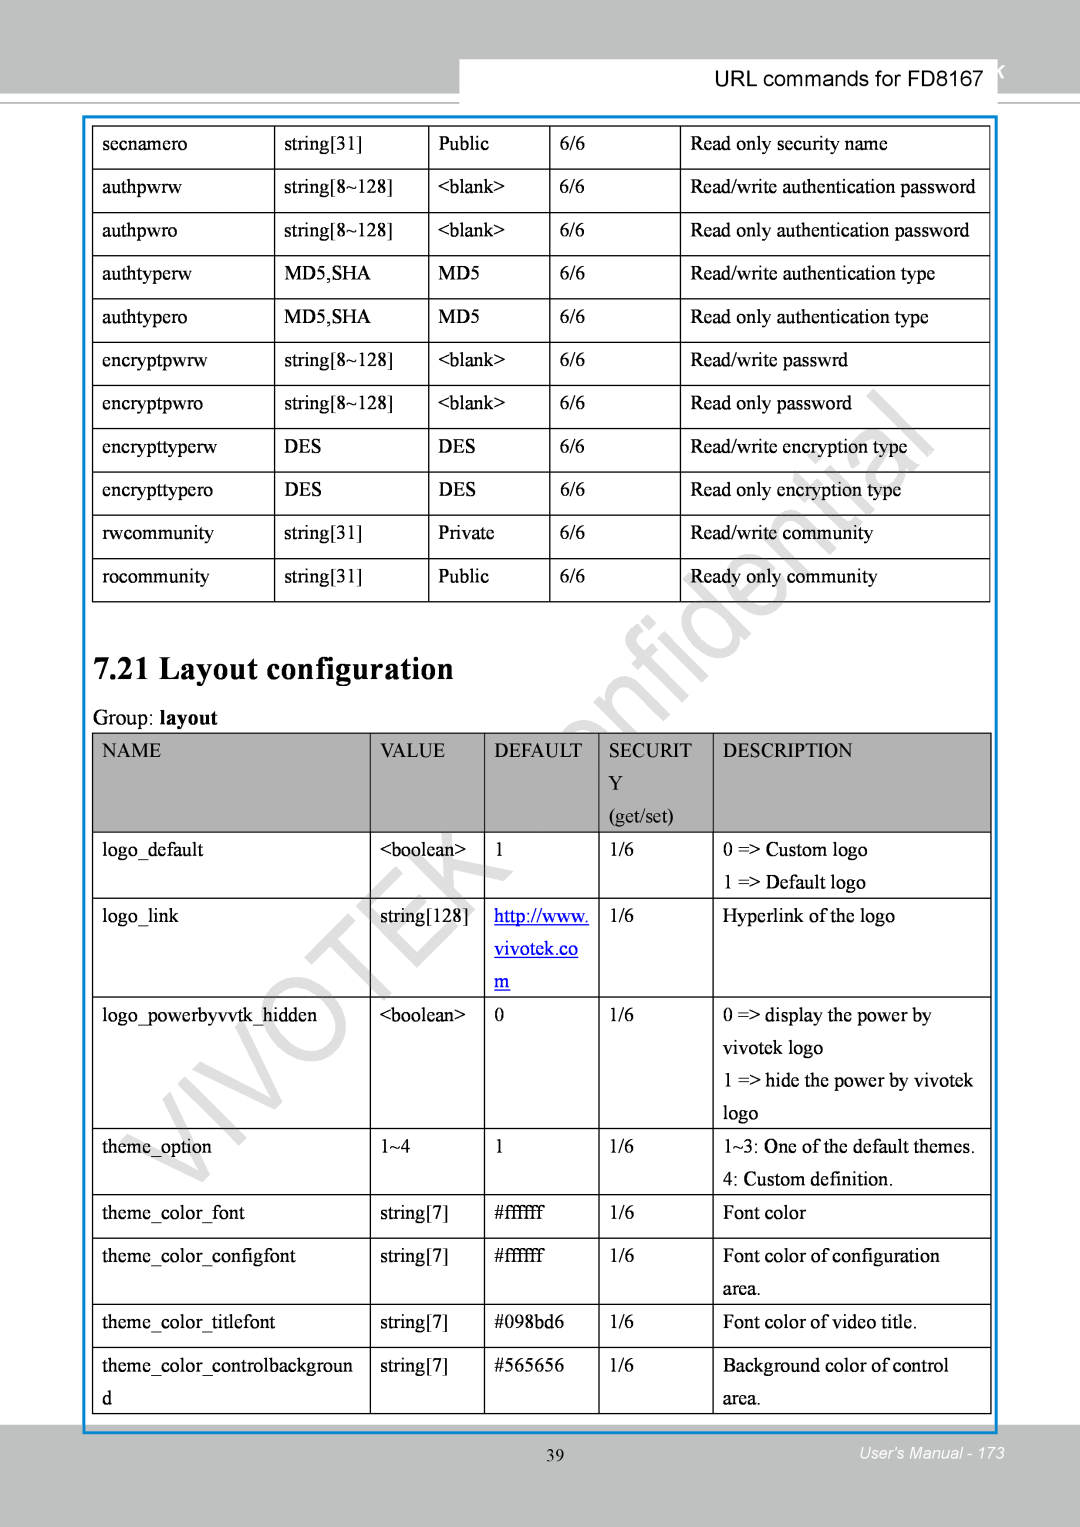 Vivotek FD8167-(T) user manual Layout configuration, Group layout, vivotek.co 